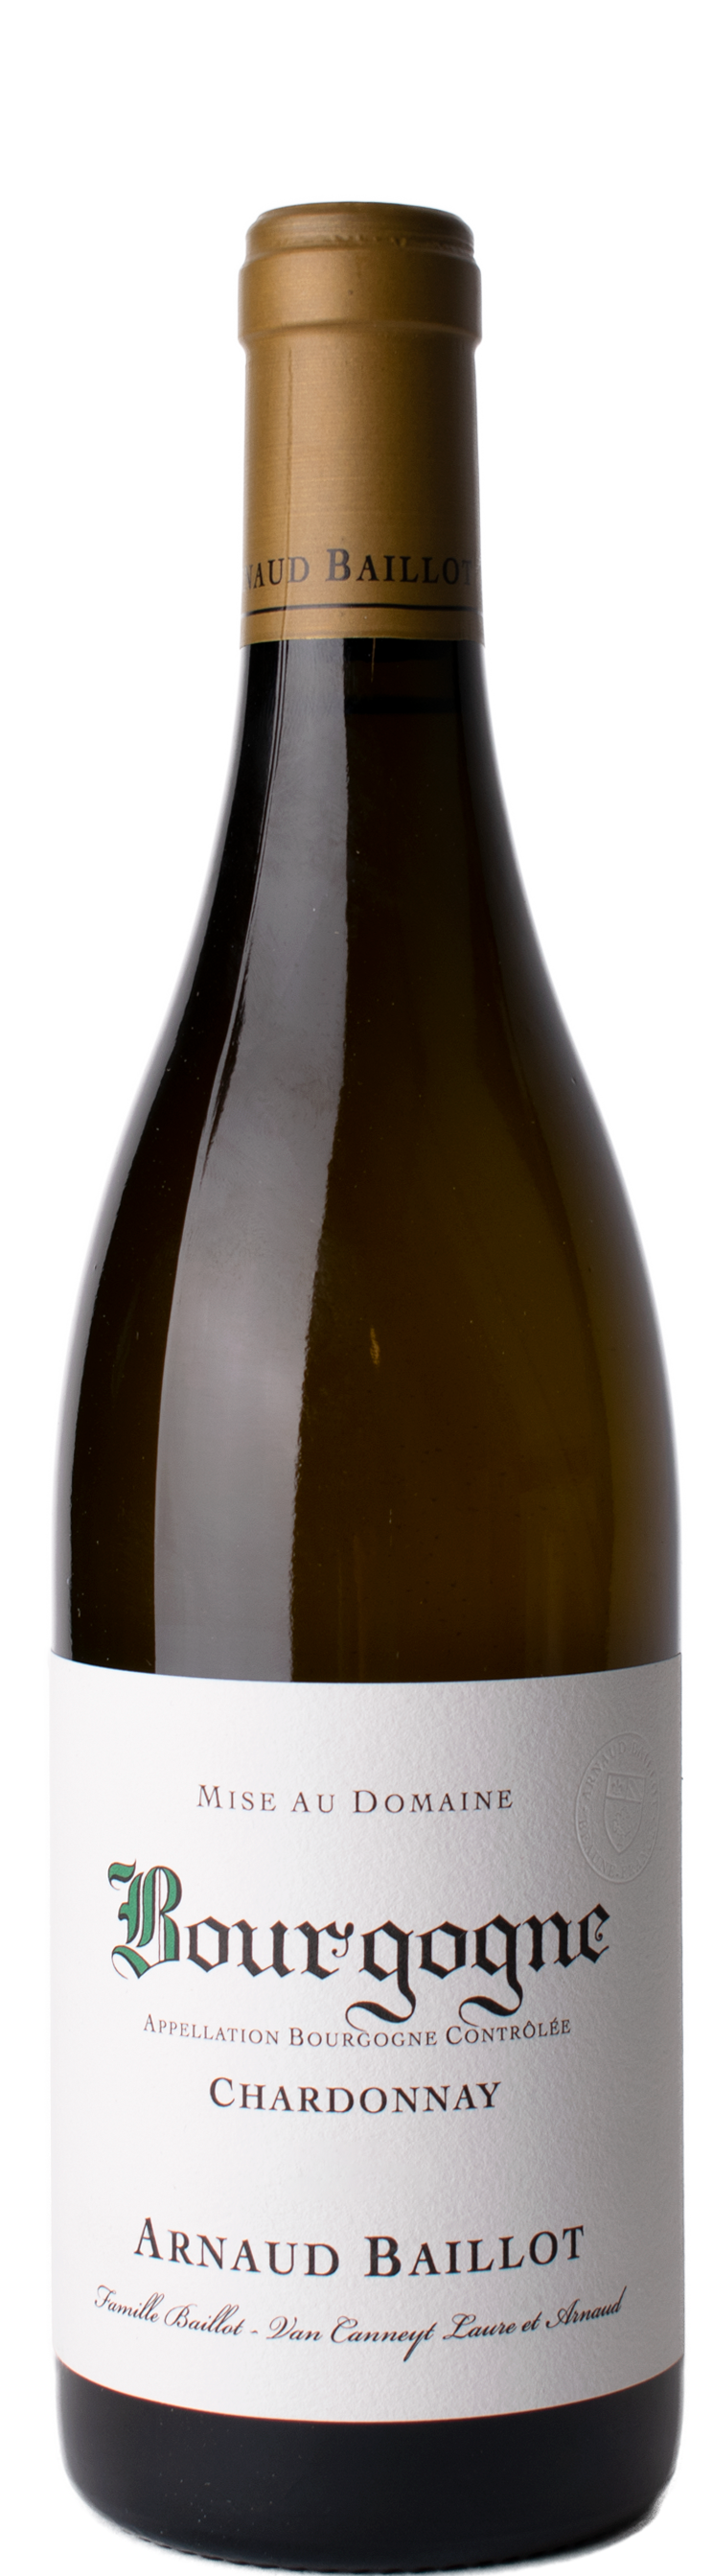 Bourgogne Chardonnay 2021